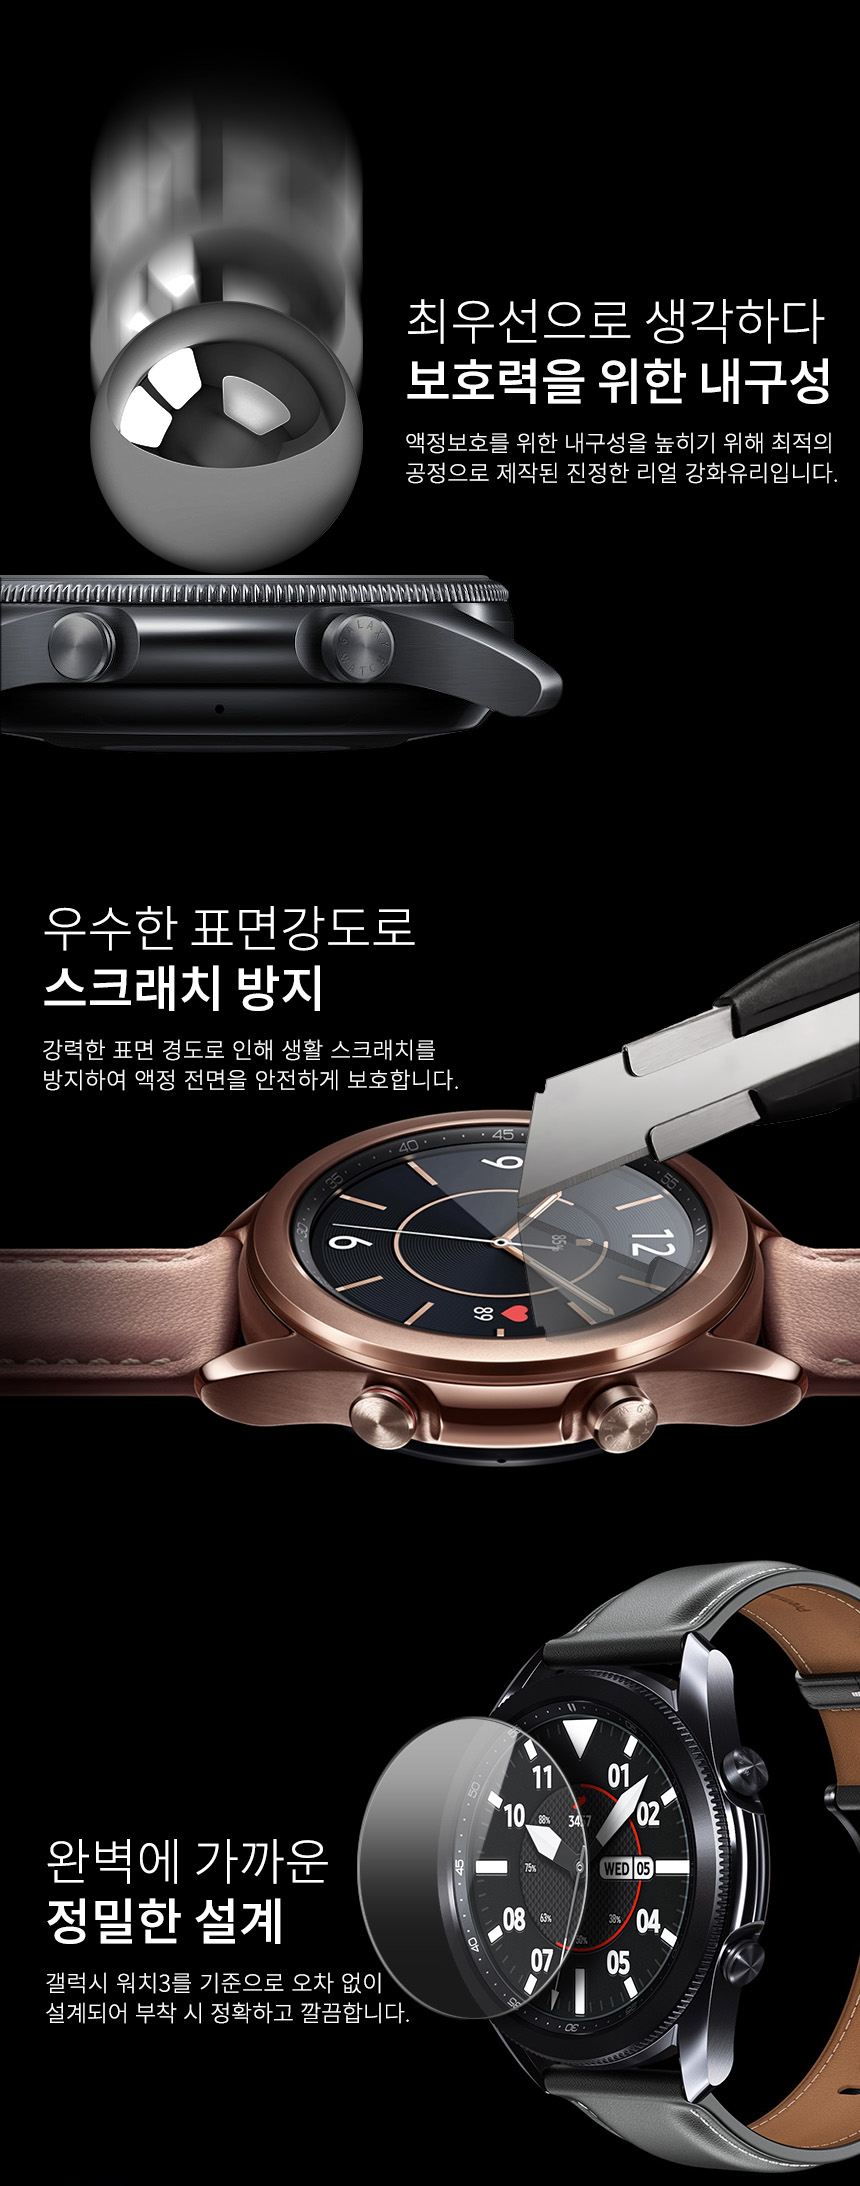 Galaxy-watch3_Glass_Page_Ver11_Smart_02.jpg